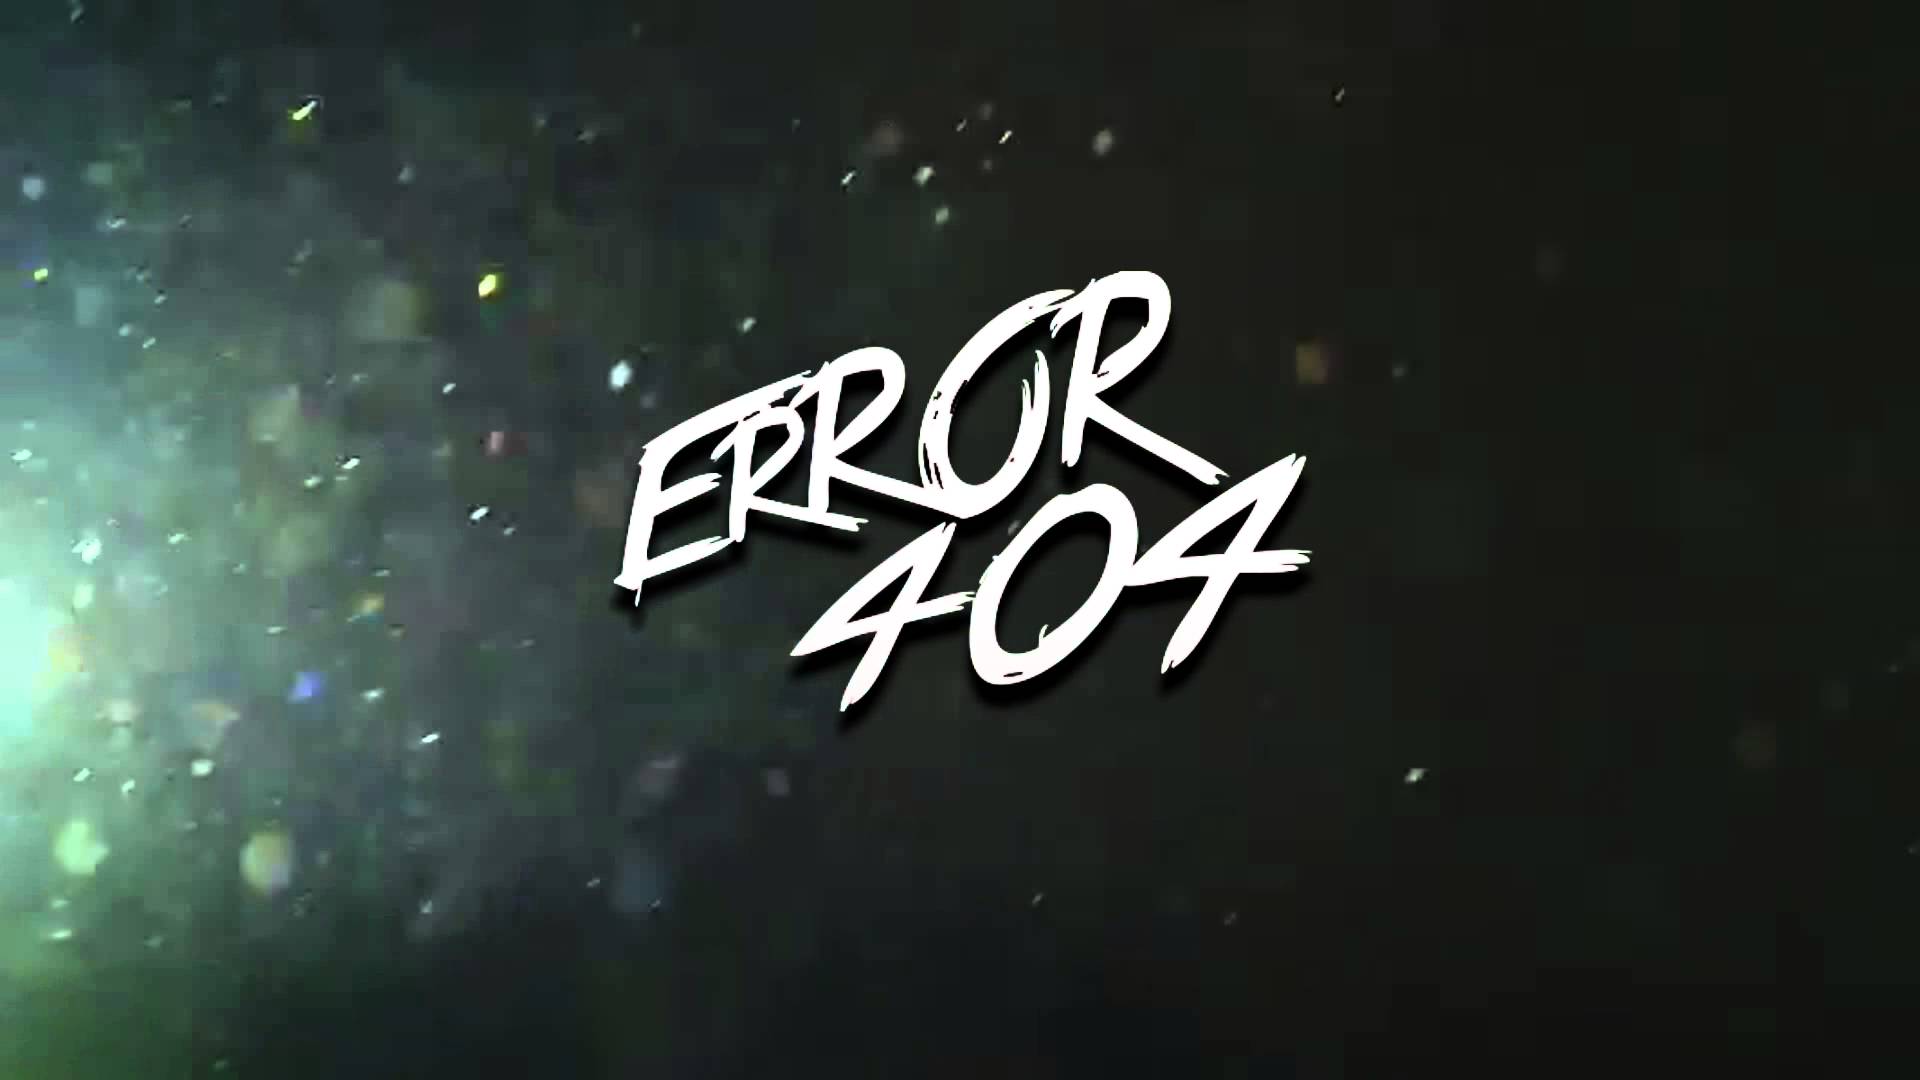 Martin Garrix Wizard Error404 Bootleg